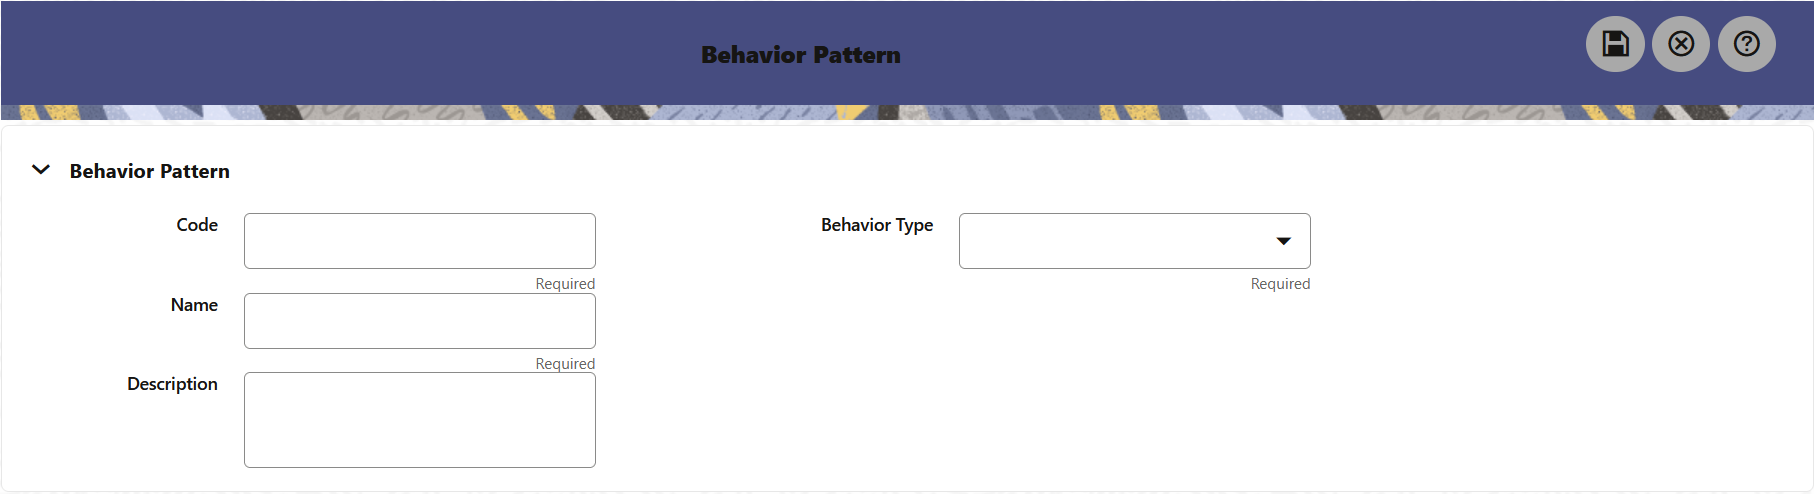 Behavior Patterns Details Page